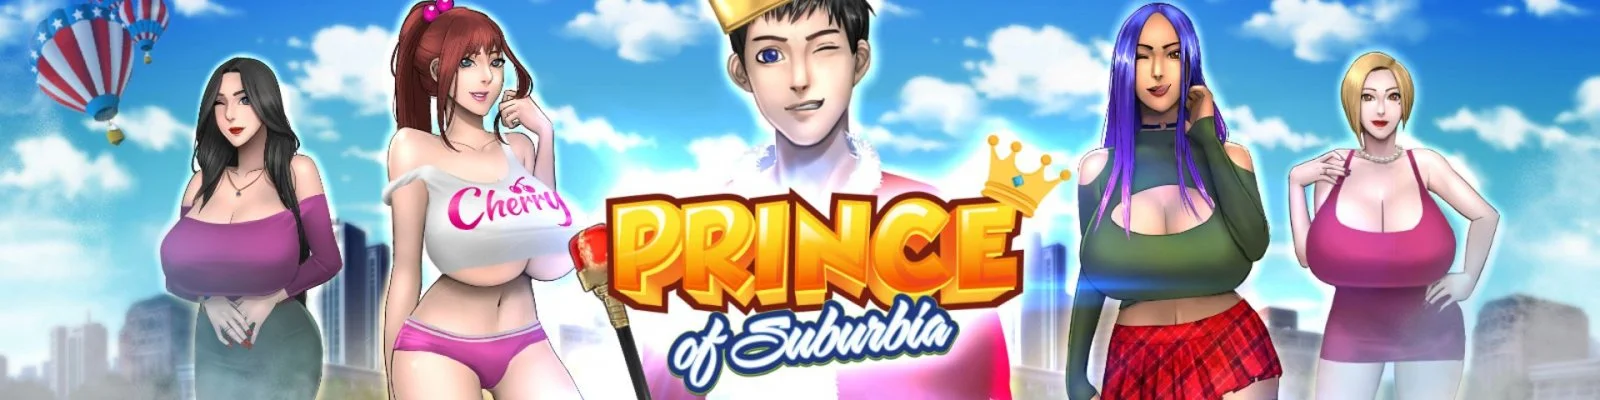 Prince of Suburbia [v0.3] main image